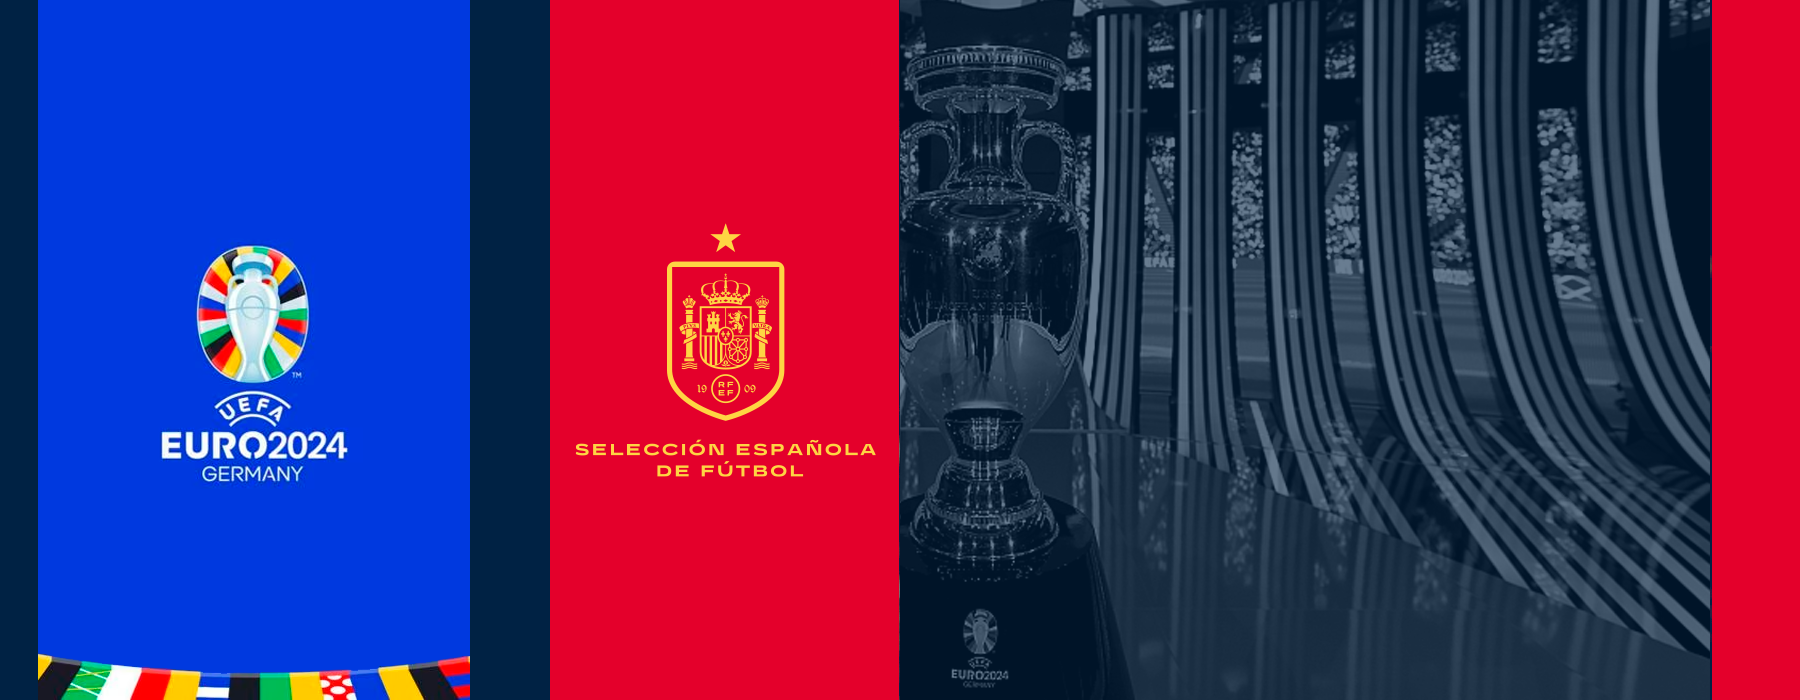 Eurocopa 2024 Tickets RFEF Entradas Selección Española de Fútbol